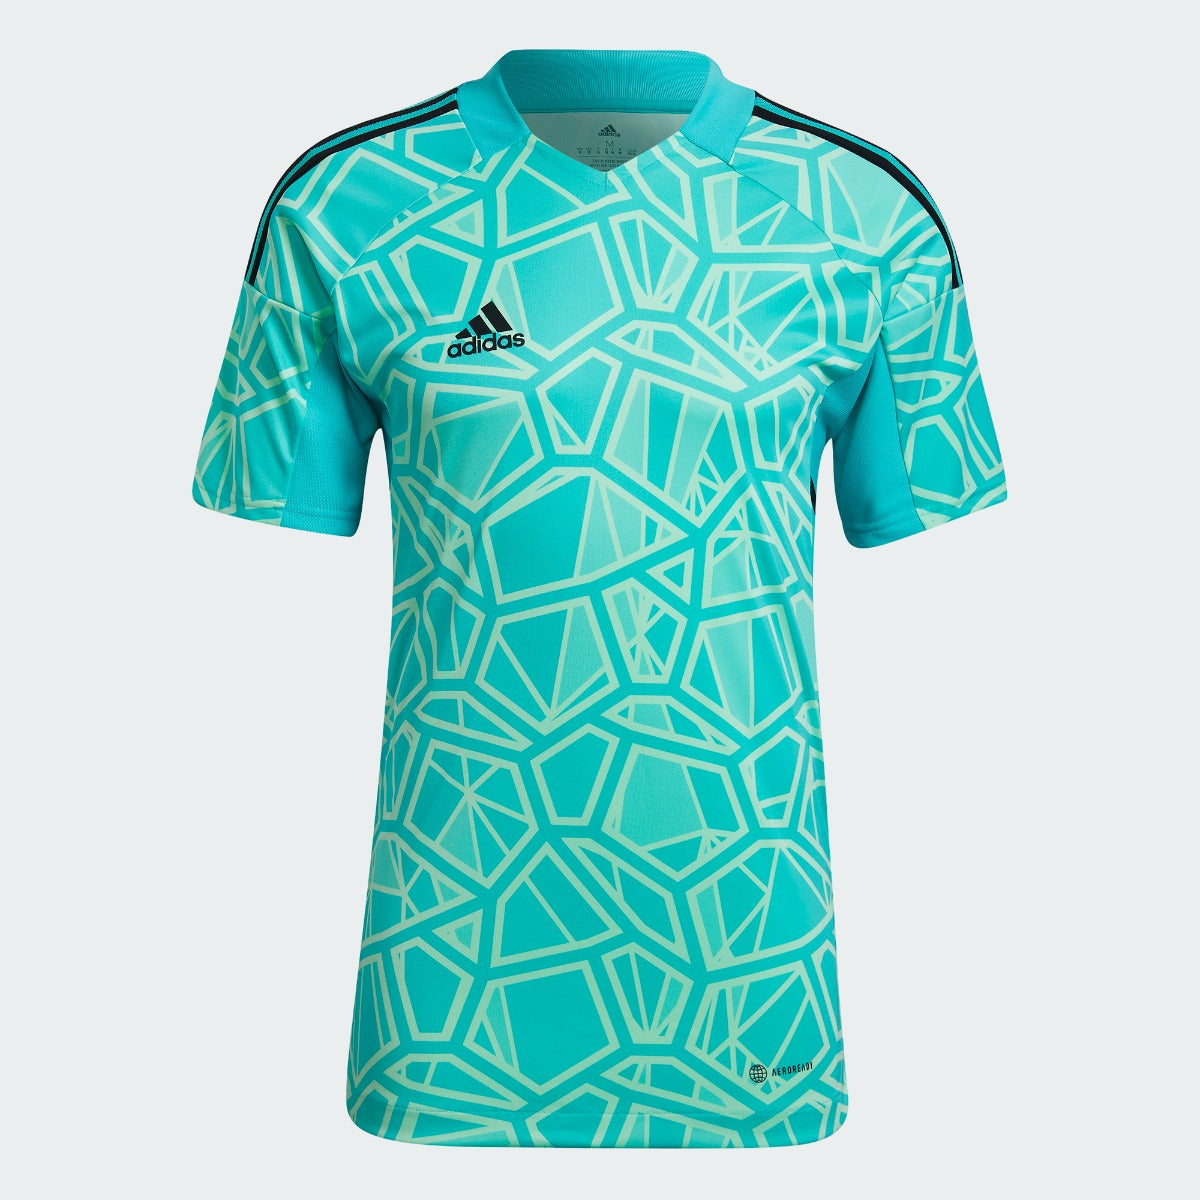 Custom Soccer Goalkeeper Jerseys, Designed For Your Club